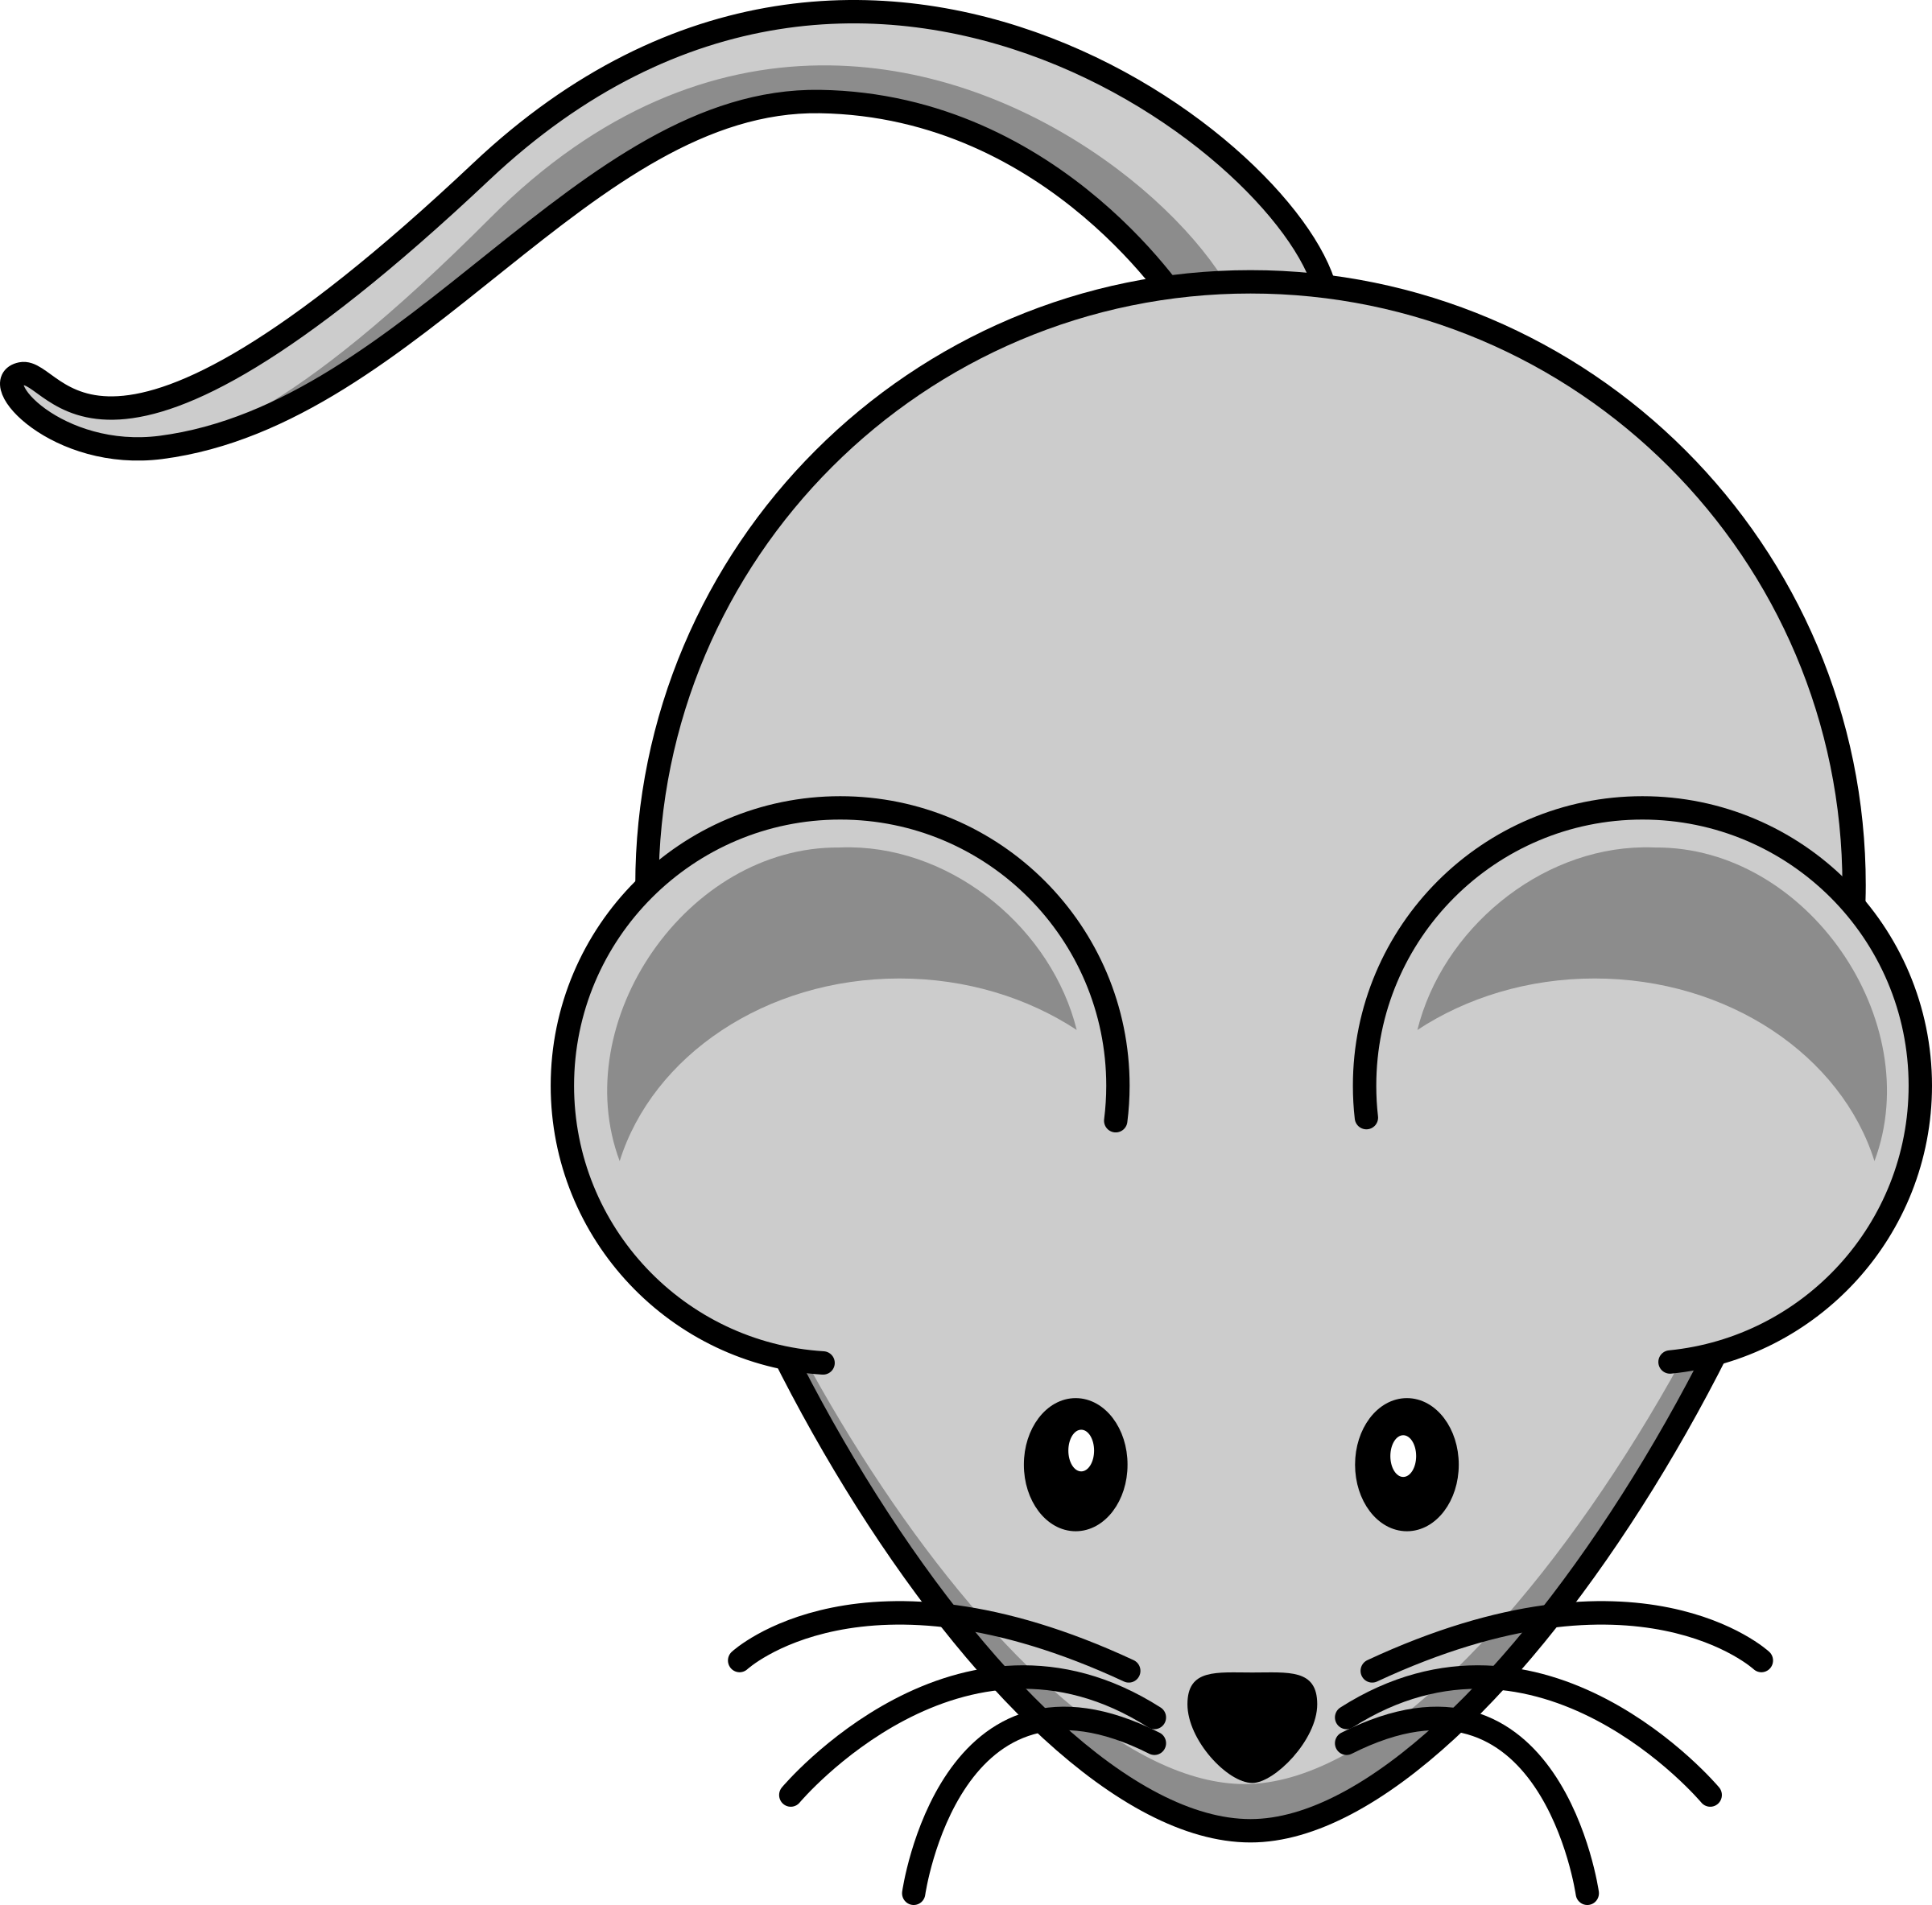 Cartoon mouse image group. Mice clipart colour